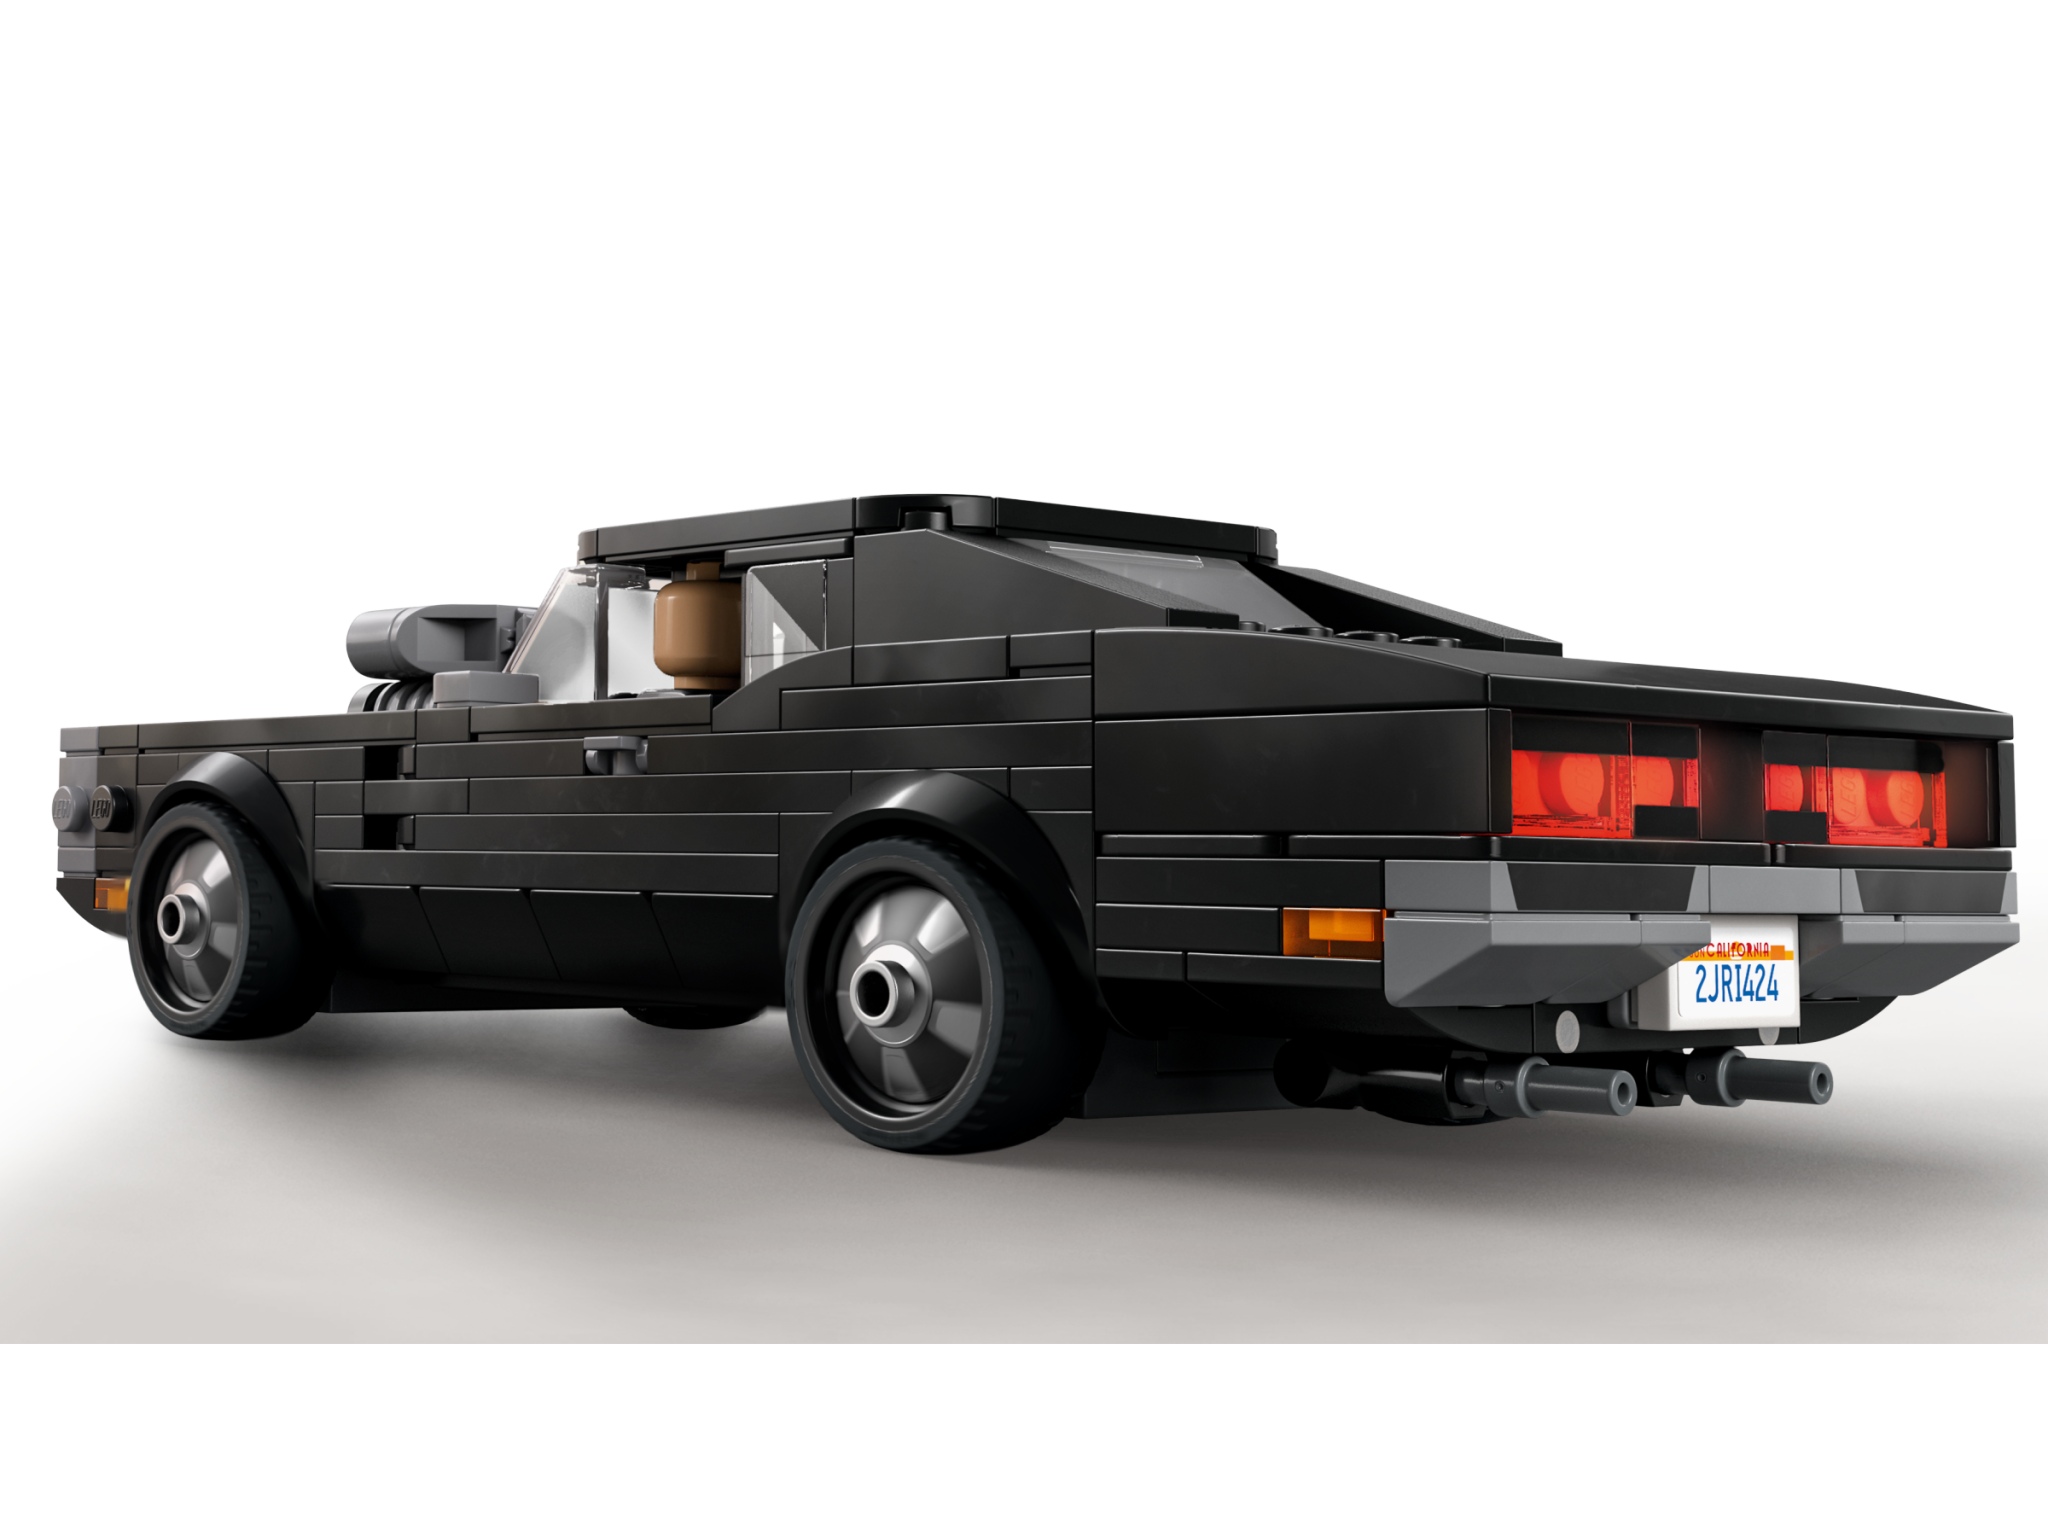 Lego 76912 Speed Champions - Fast & Furious 1970 Dodge Charger R/T - Maitre  des Jeux